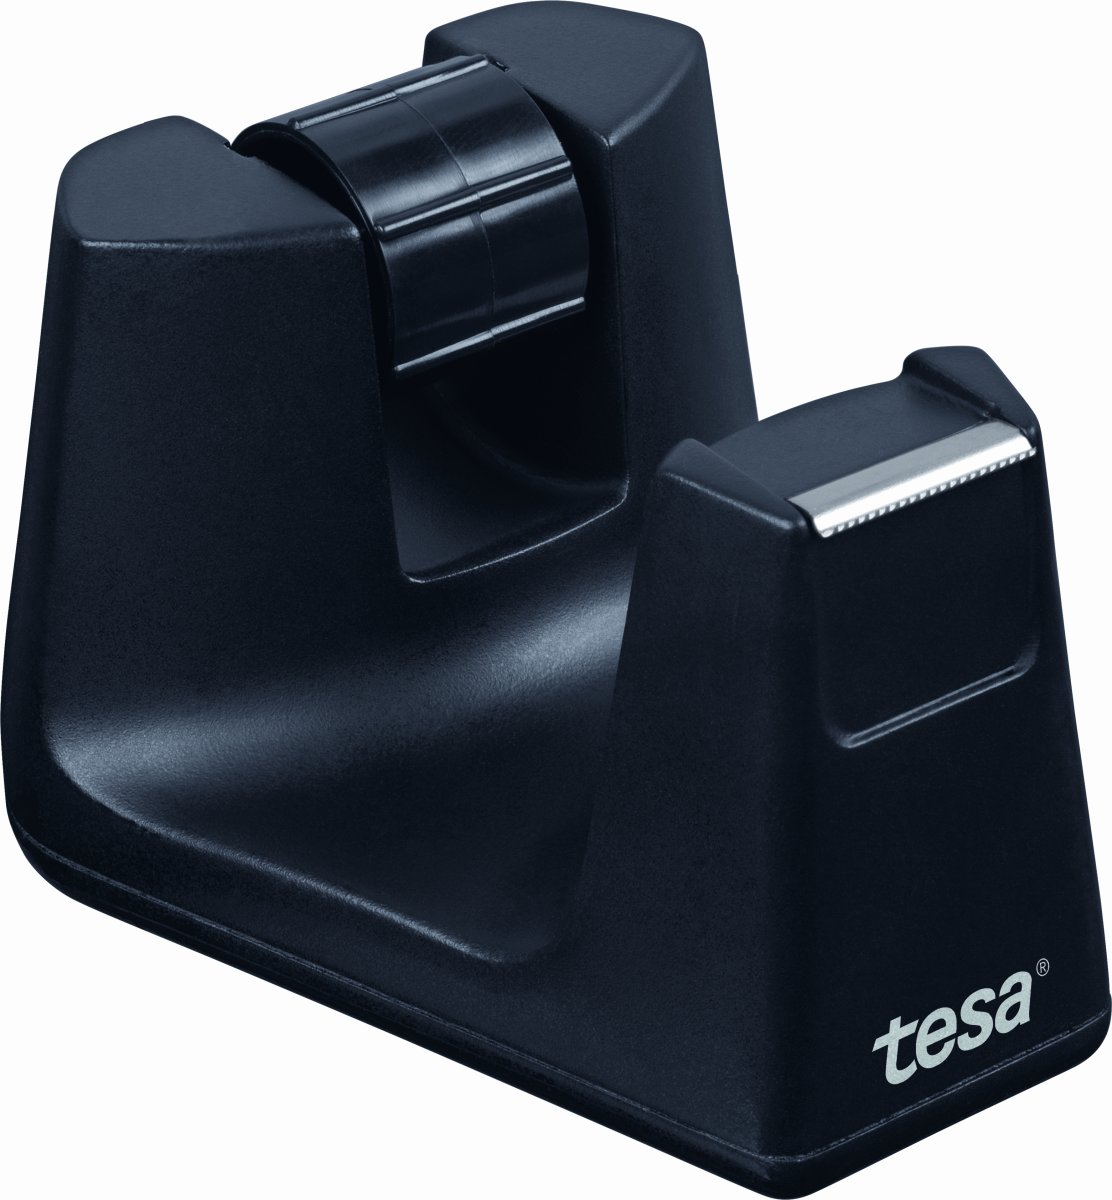 tesa ecoLogo Easy Cut Smart dispenser